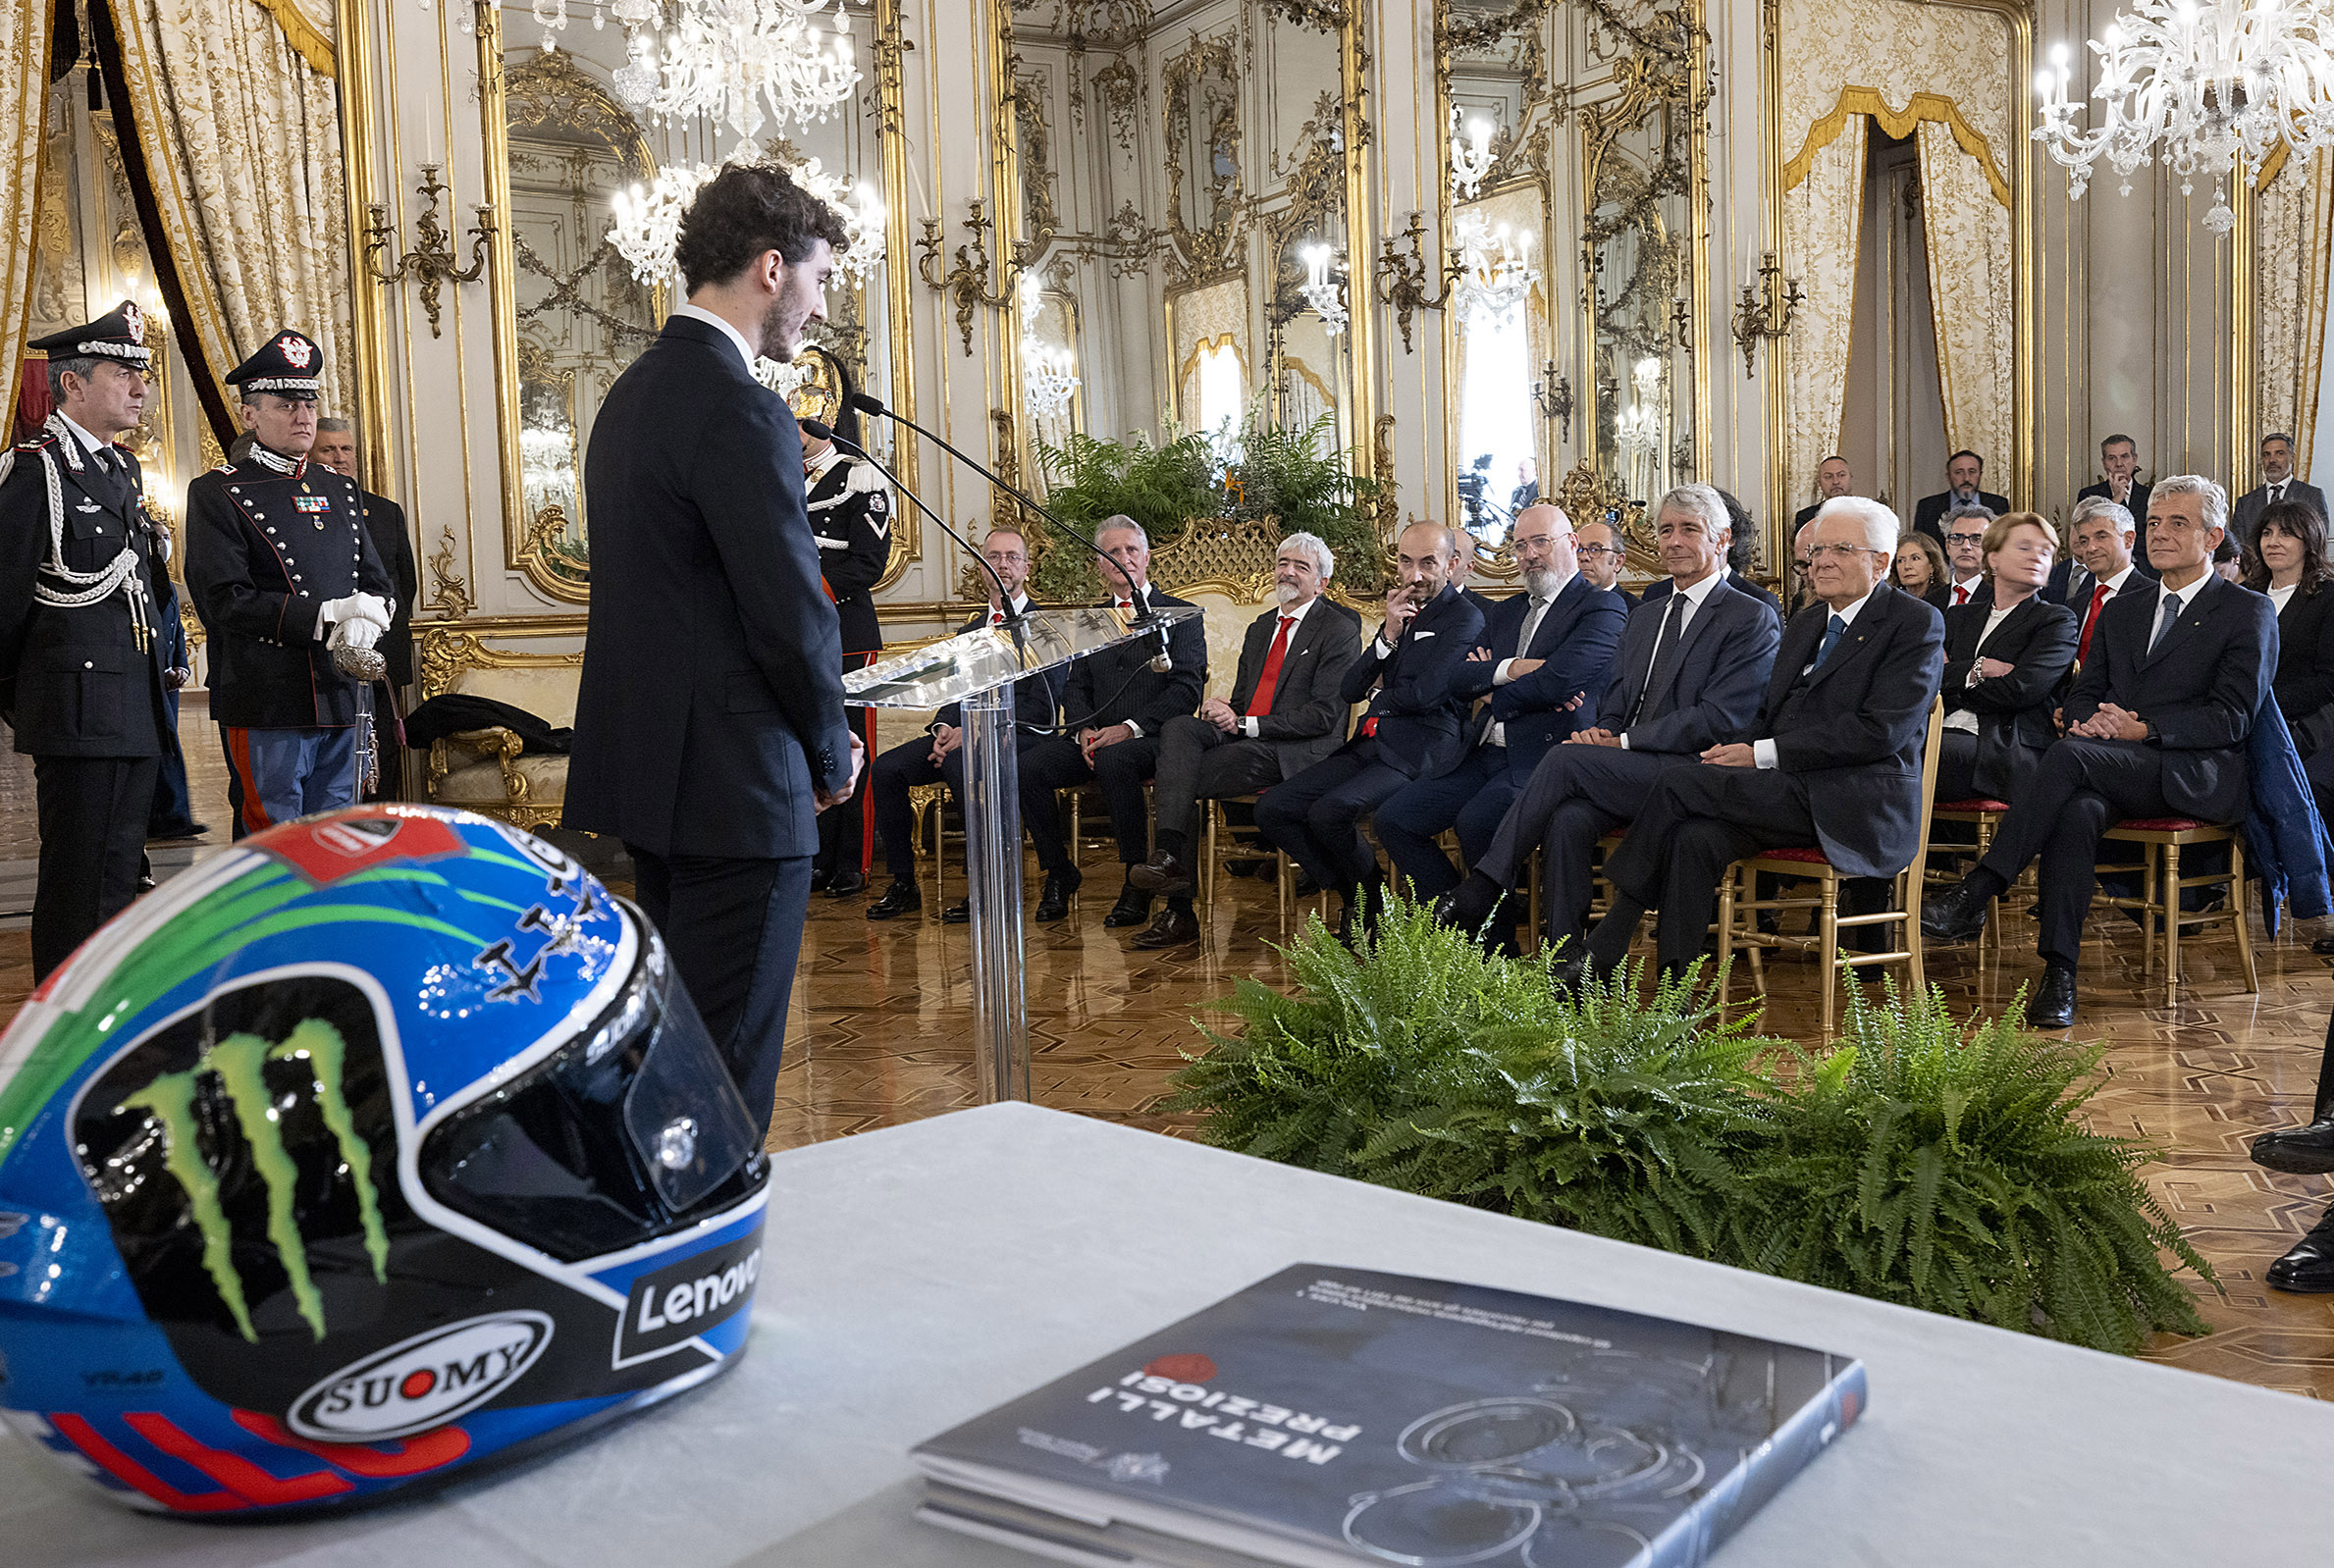 Francesco Bagnaia and Ducati meet the President of the Italian Republic, Sergio Mattarella (Quirinale).